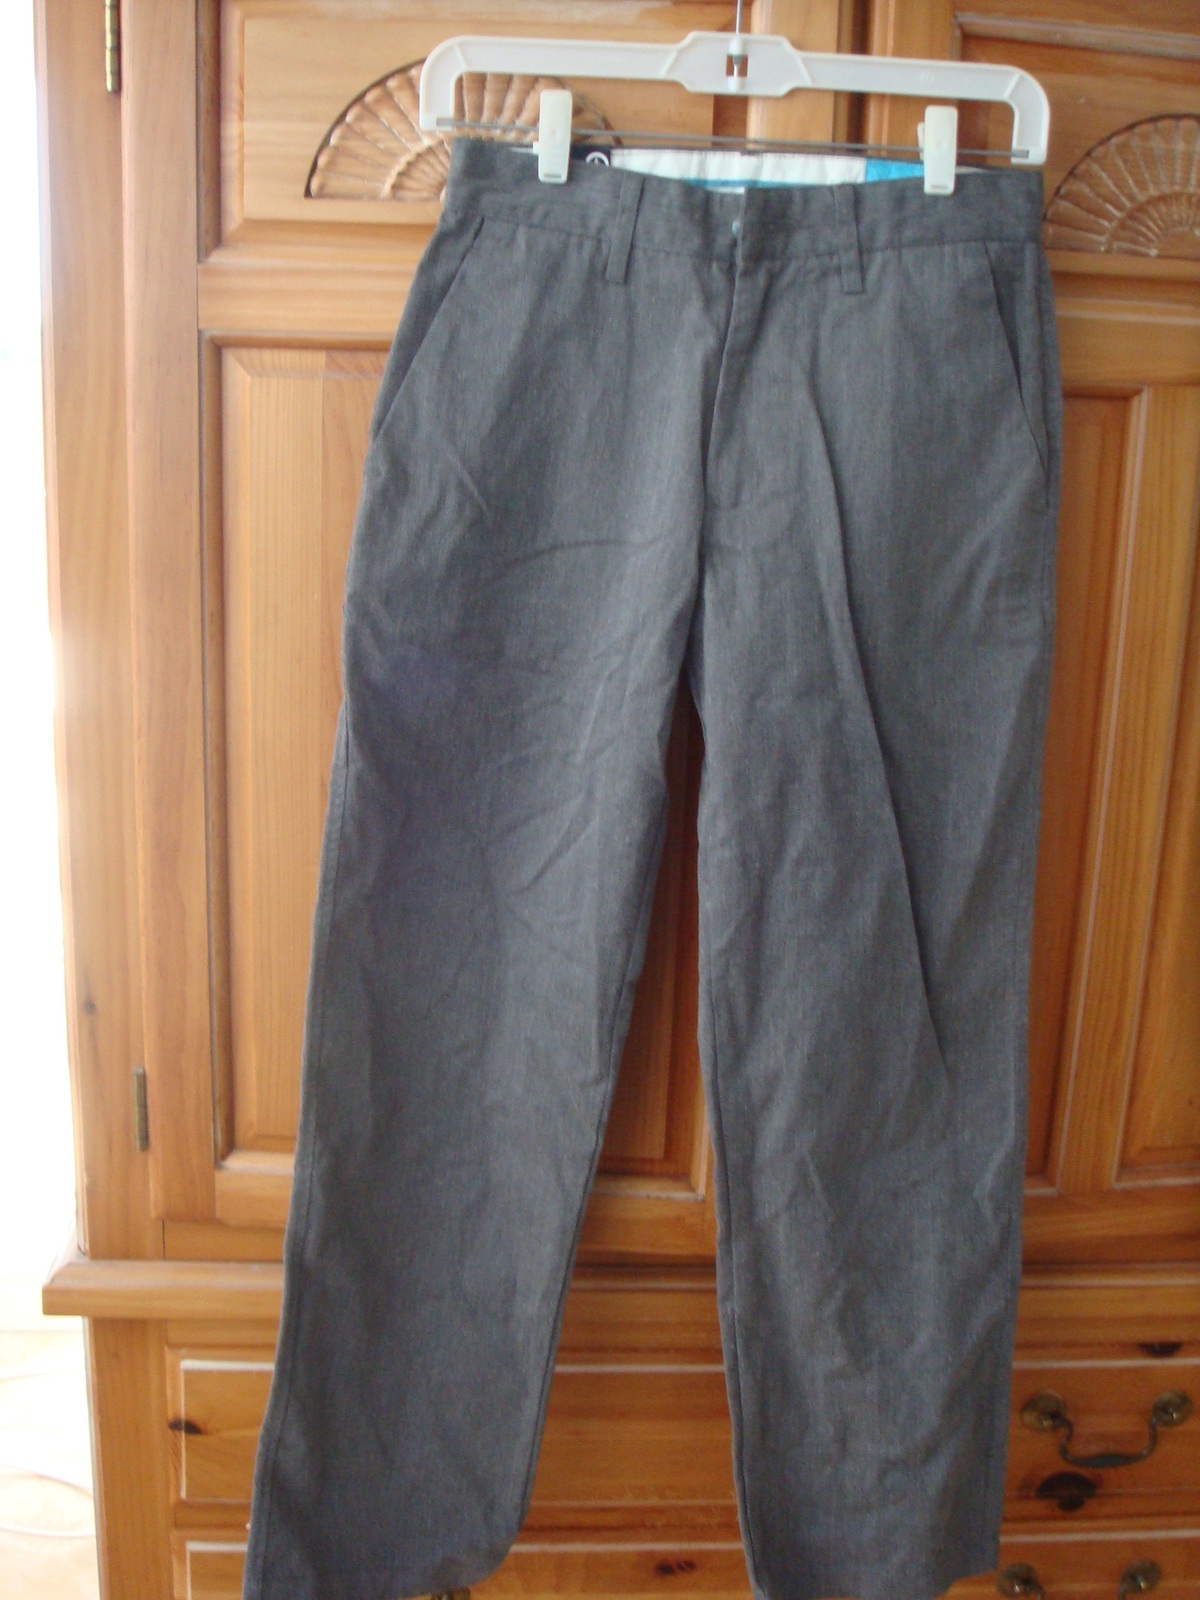 50% off mfr retail price Boys Grey Pants by Volcom size 26 - Pants